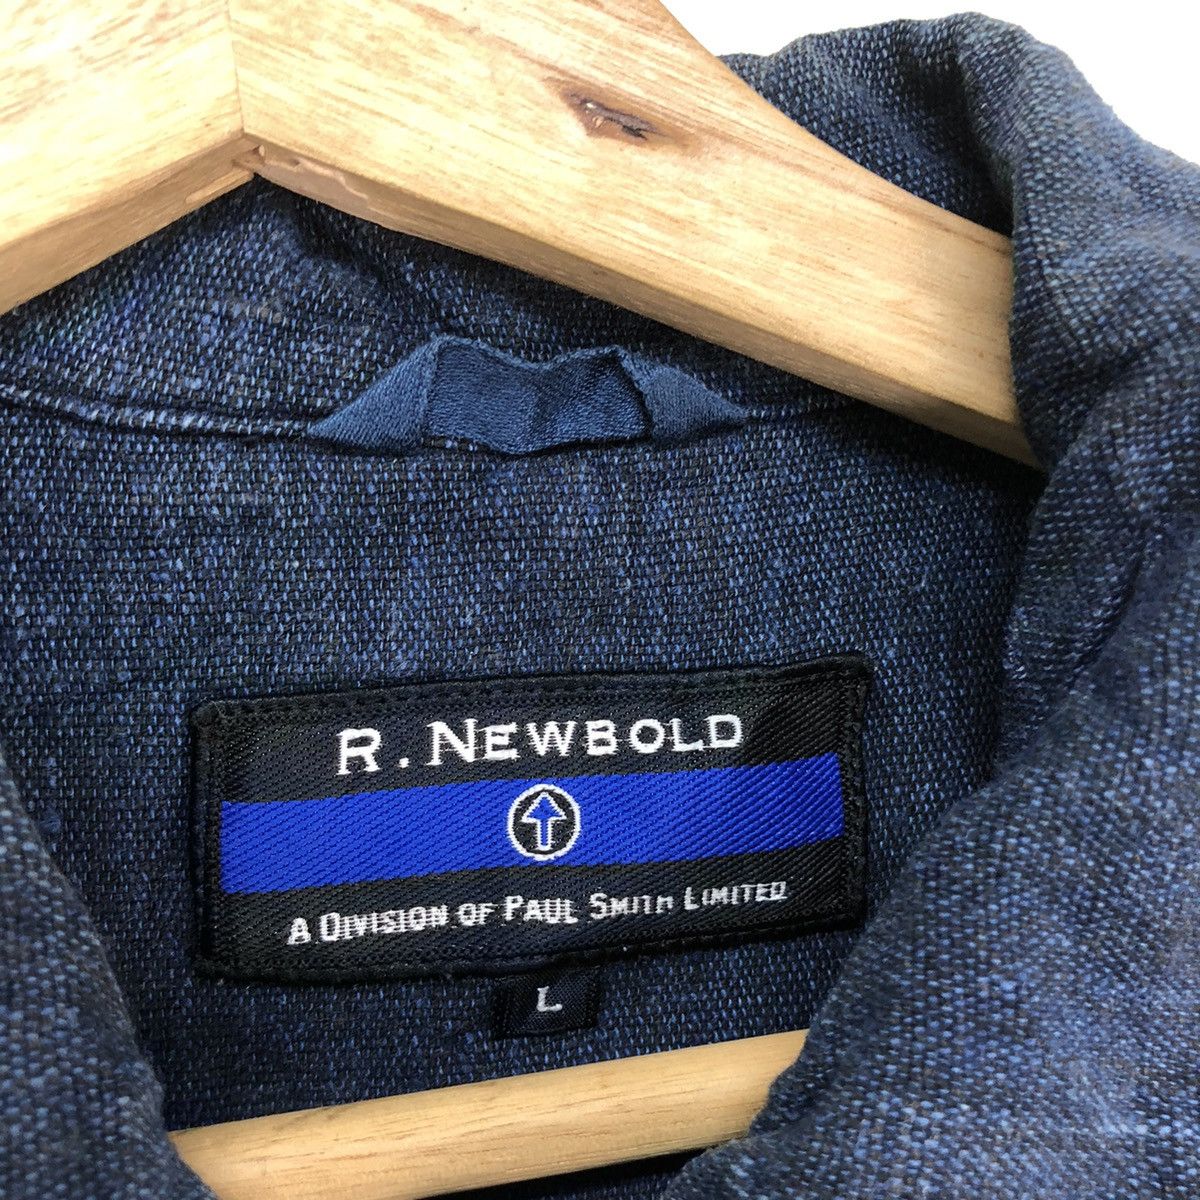 🫴🏻R New Bold Double Pocket Fully Zip Jacket - 7